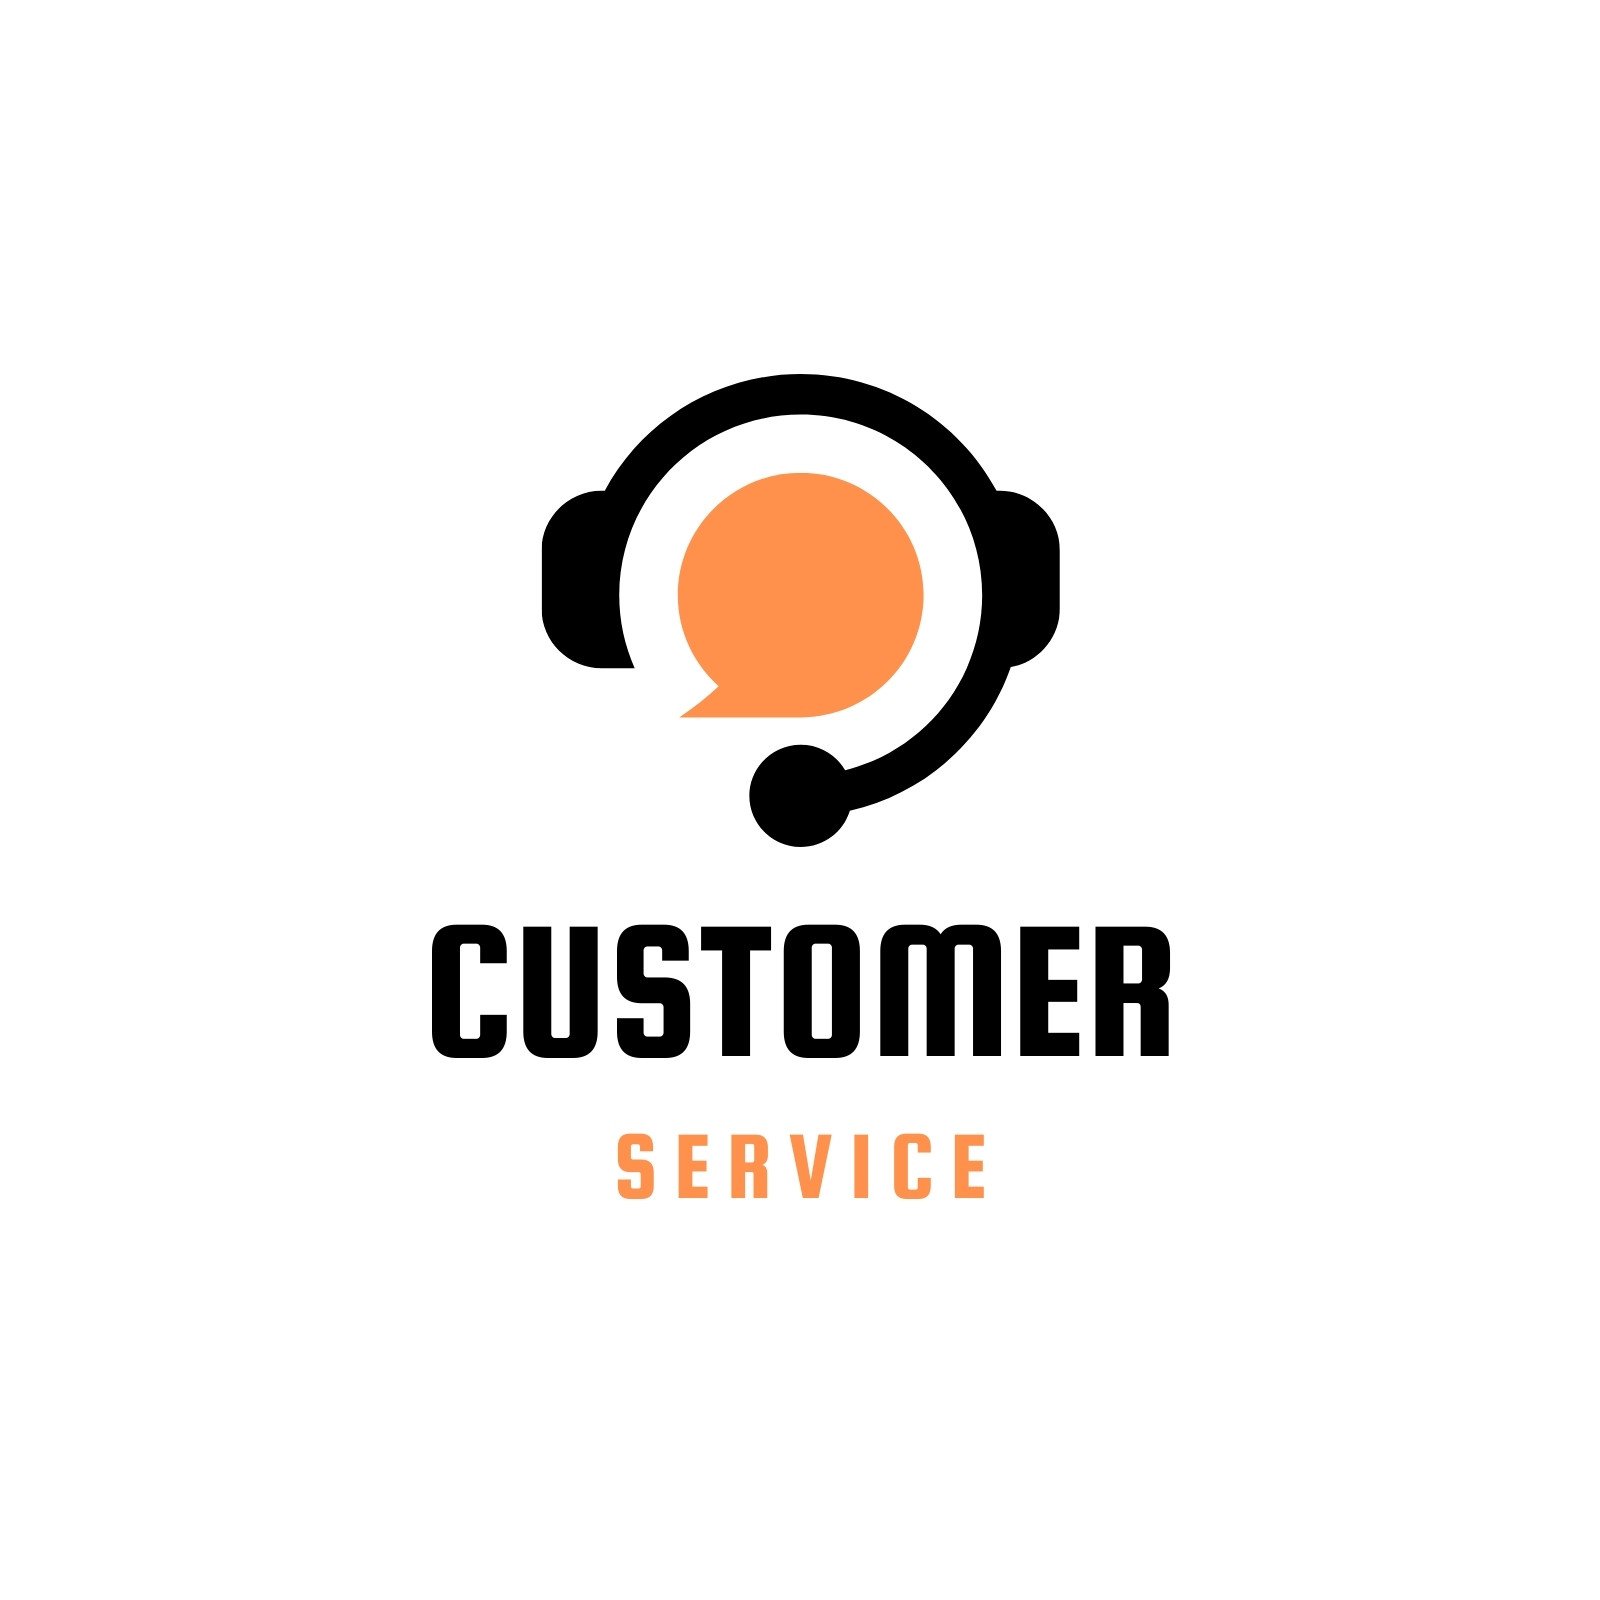 Call Center Logo - Free Vectors & PSDs to Download